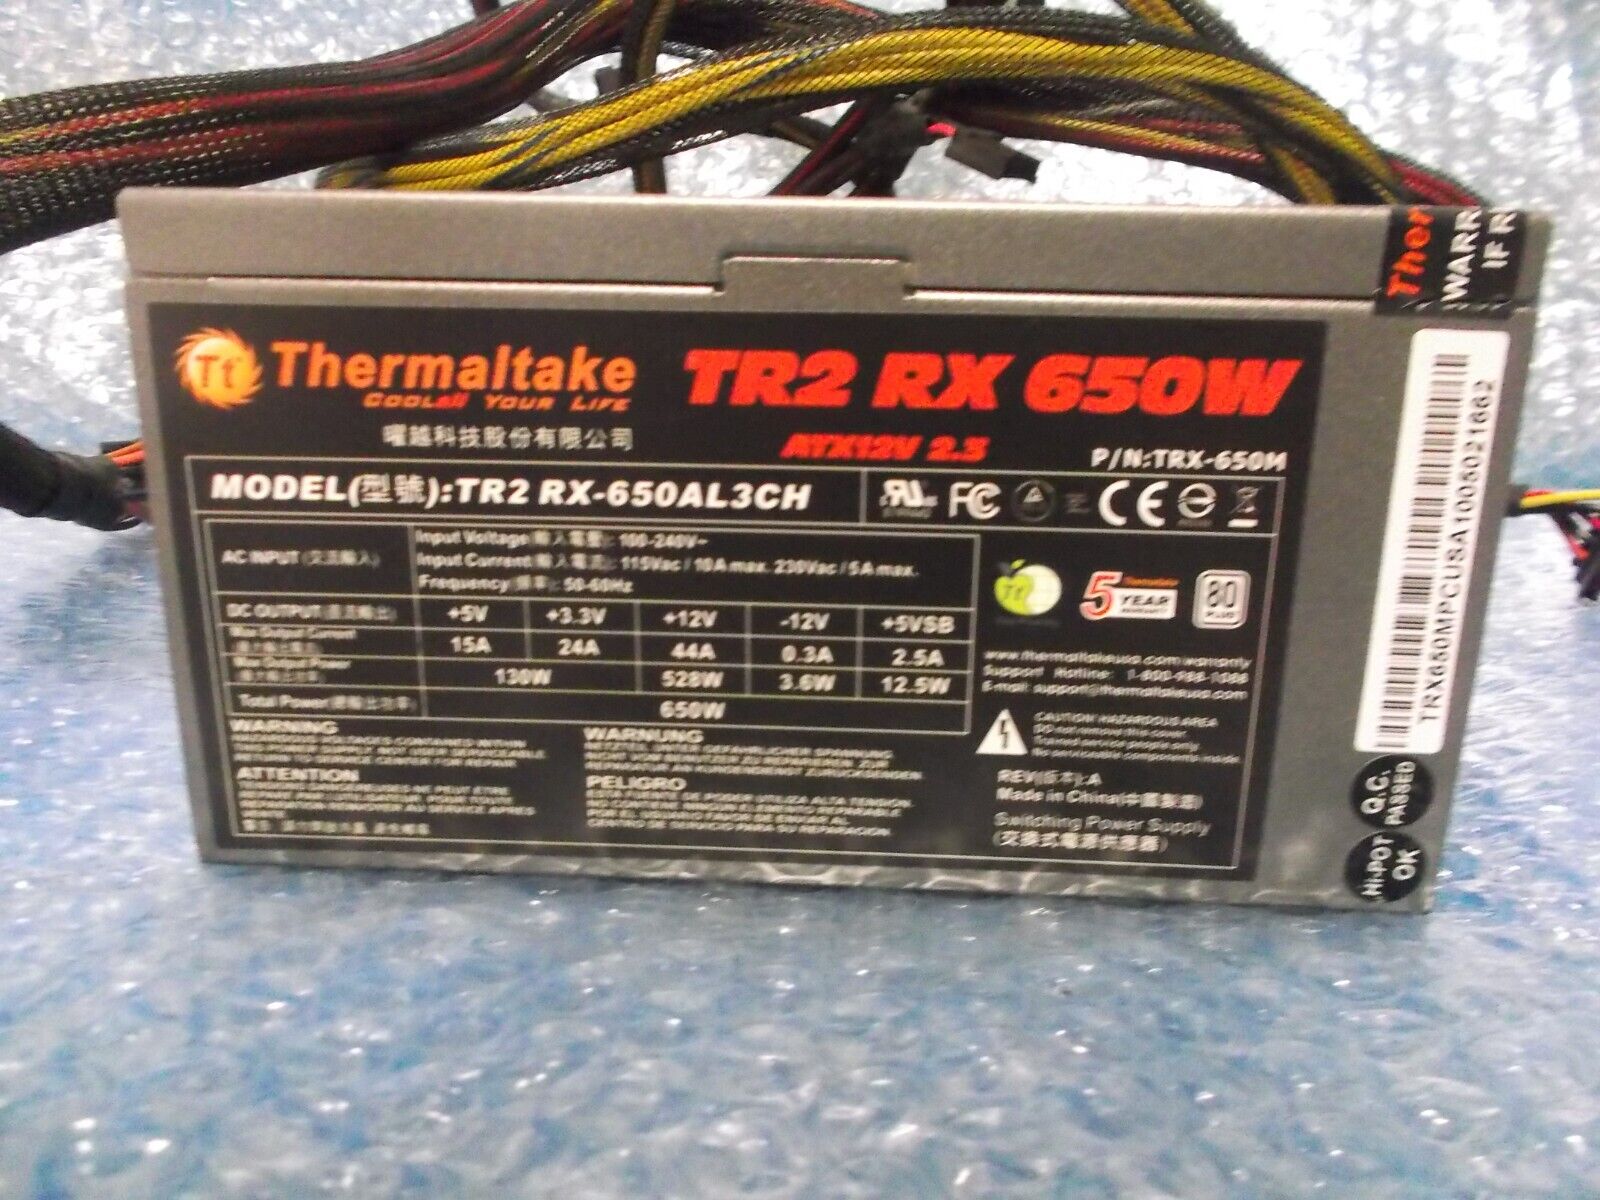 THERMALTAKE TR2 RX-650 ATX 12V 2.2 14cm Fan 650 POWER SUPPLY PSU